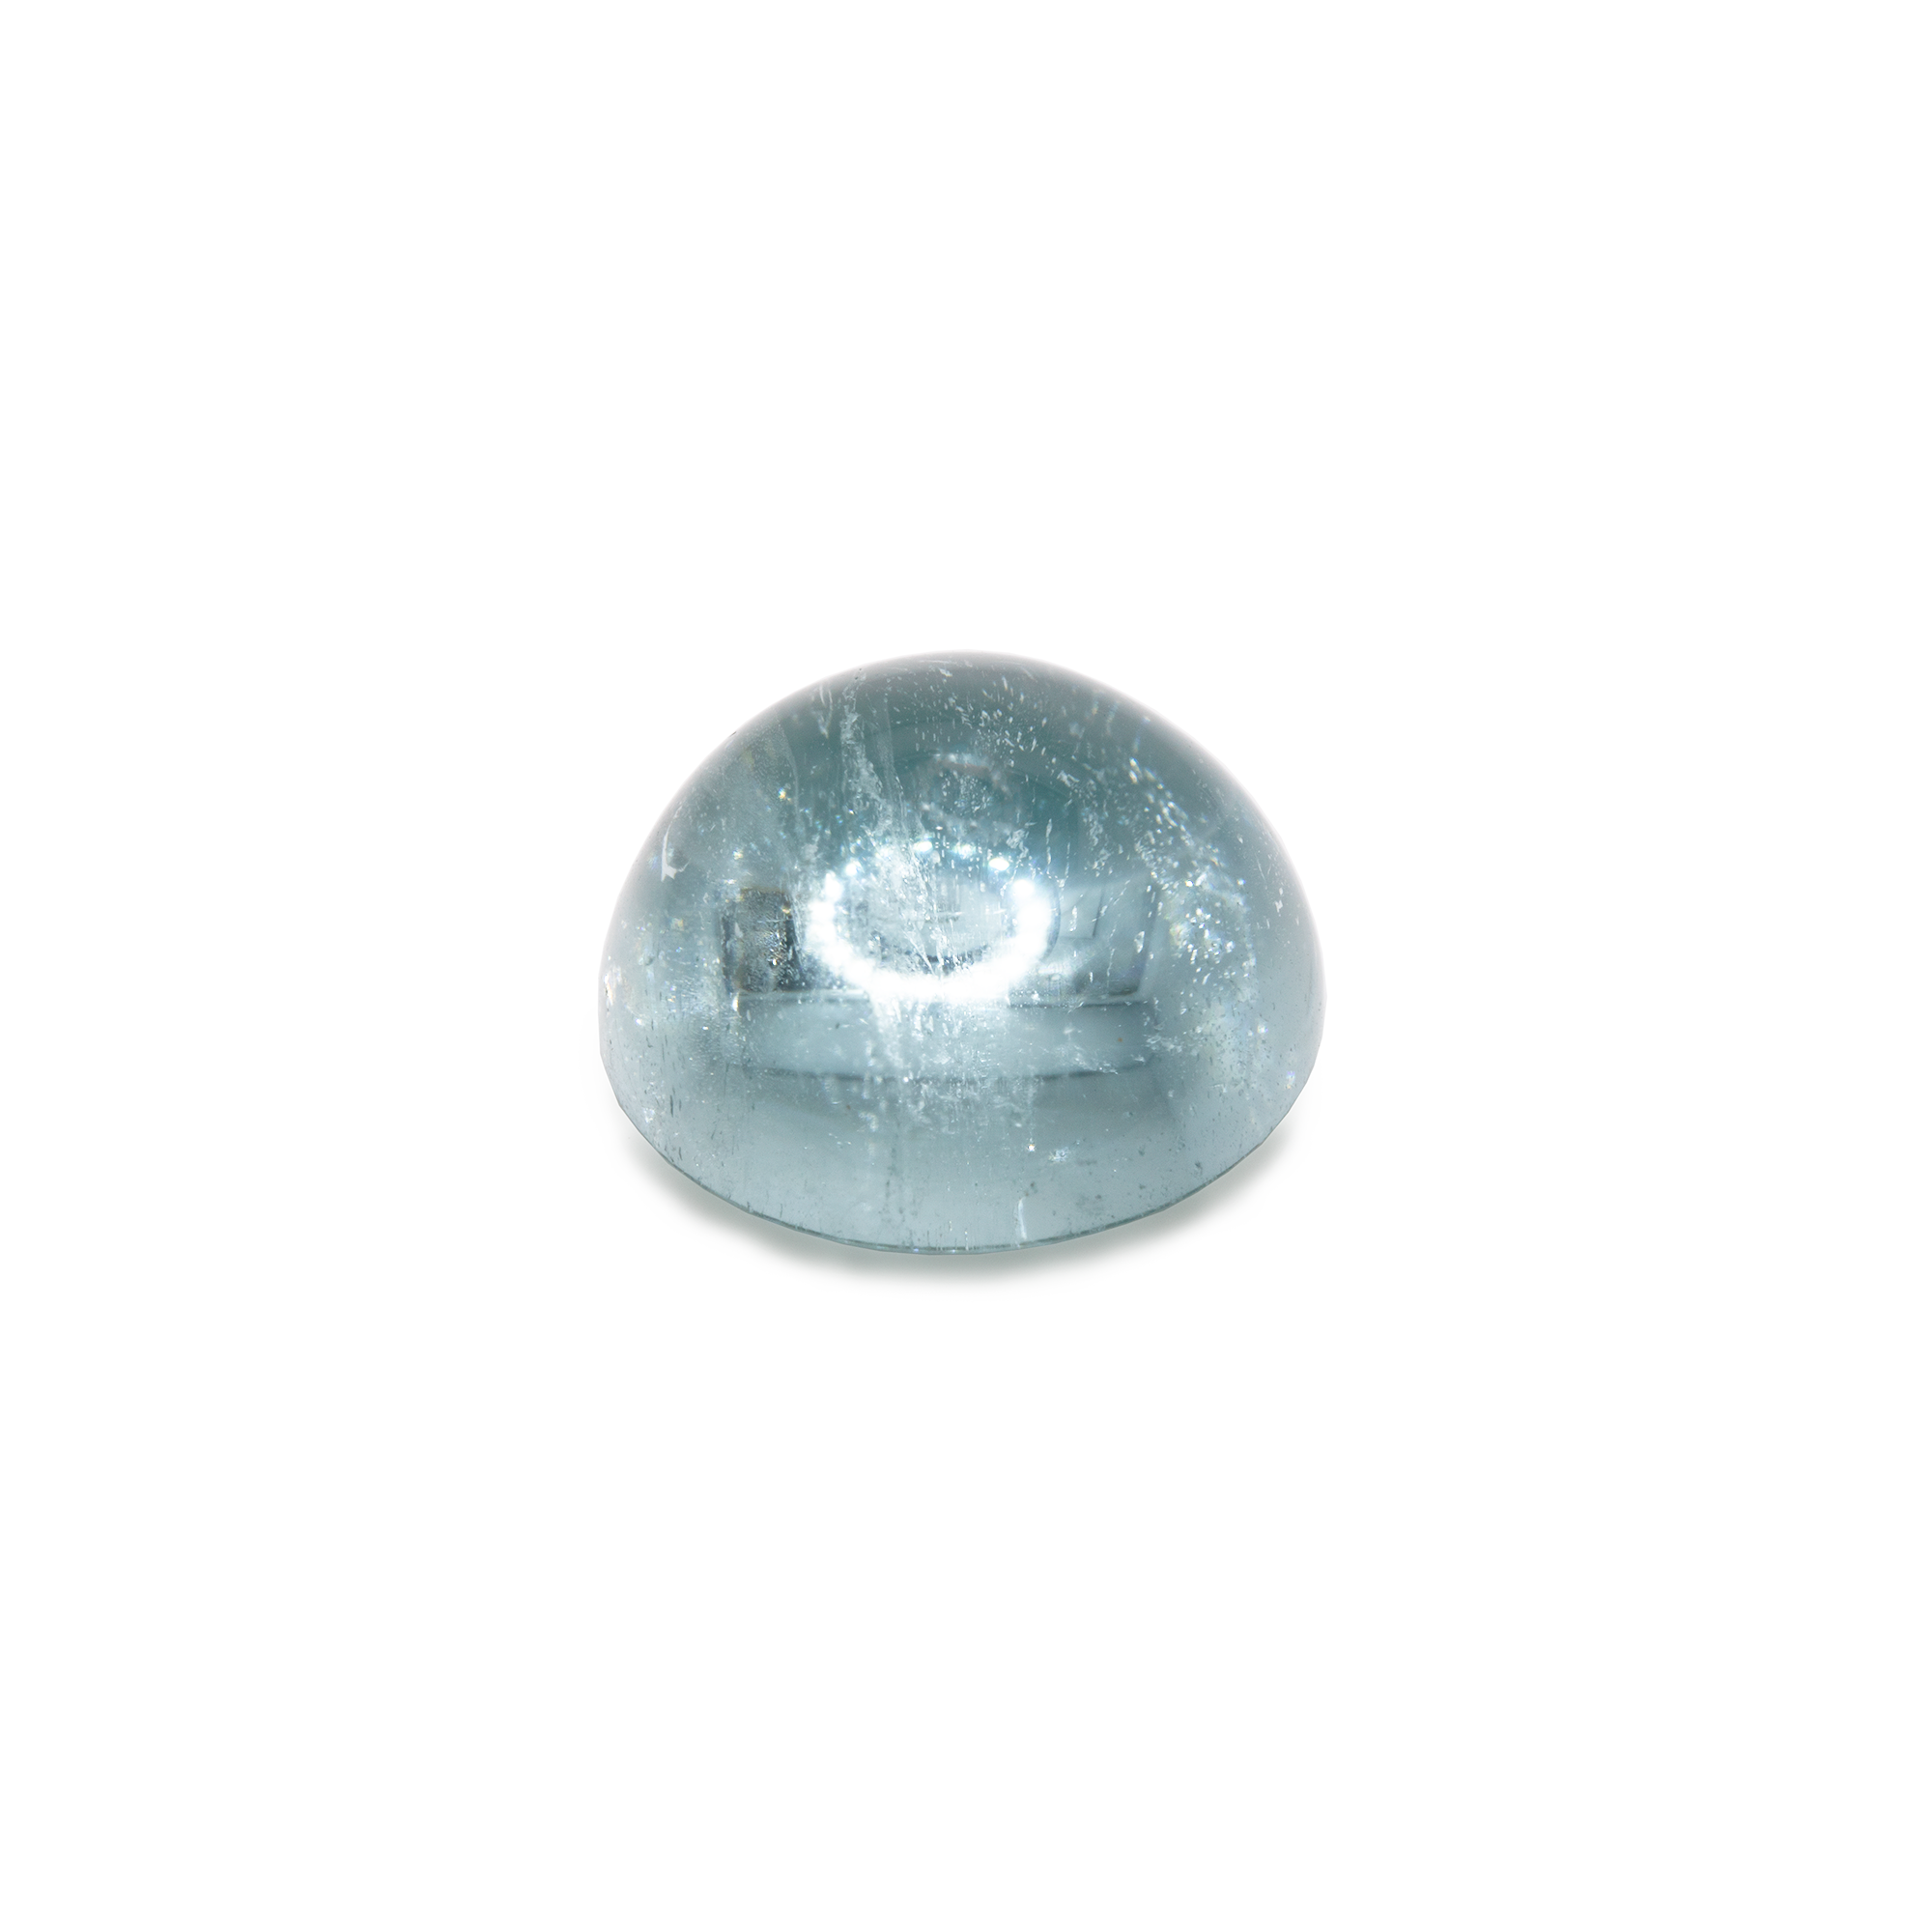 Aquamarine - A, round, 16.5x16.5mm, 18.31 cts, No. A46001